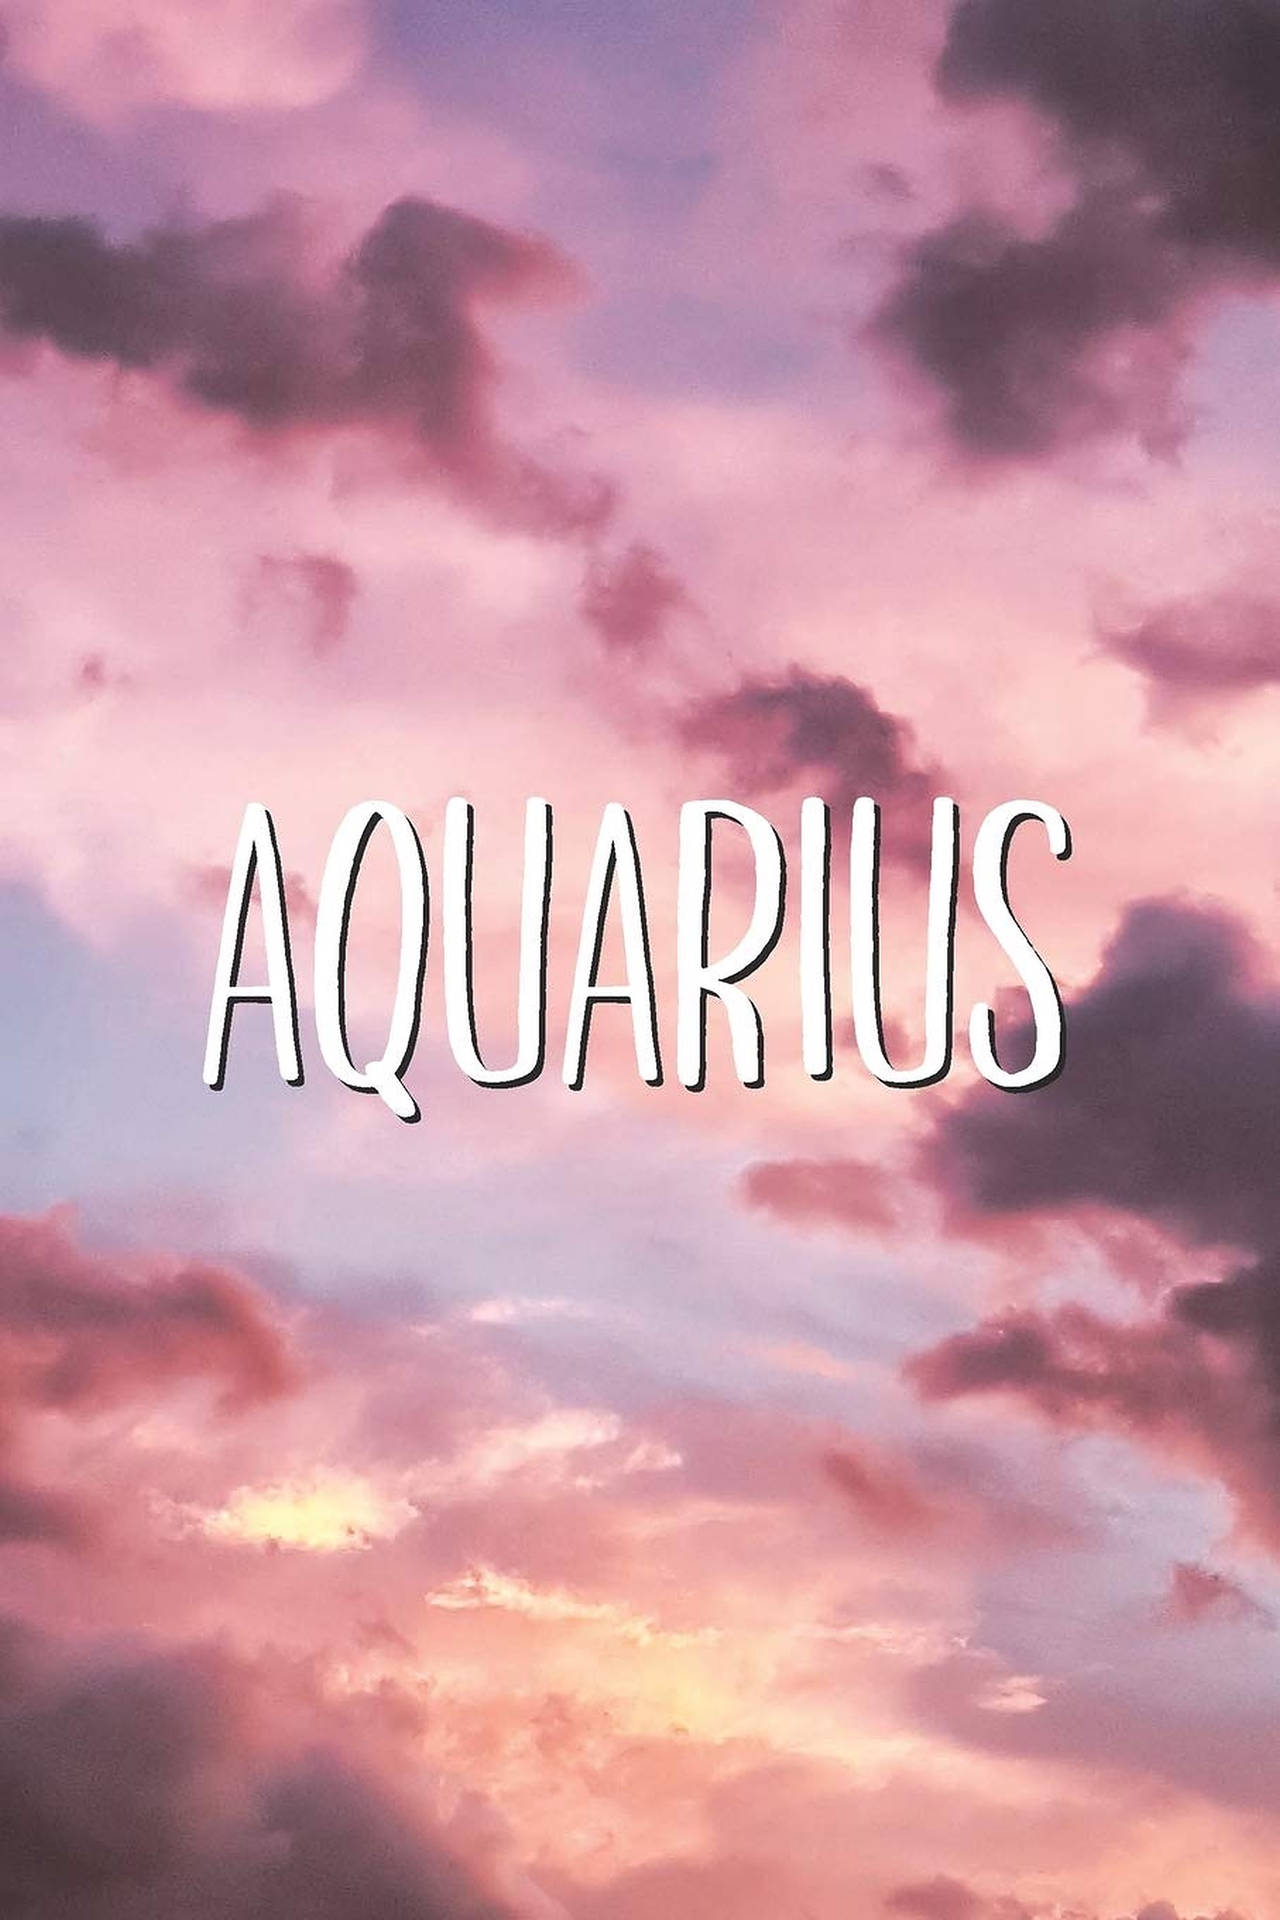 Top 999+ Aquarius Zodiac Wallpaper Full HD, 4K✅Free to Use